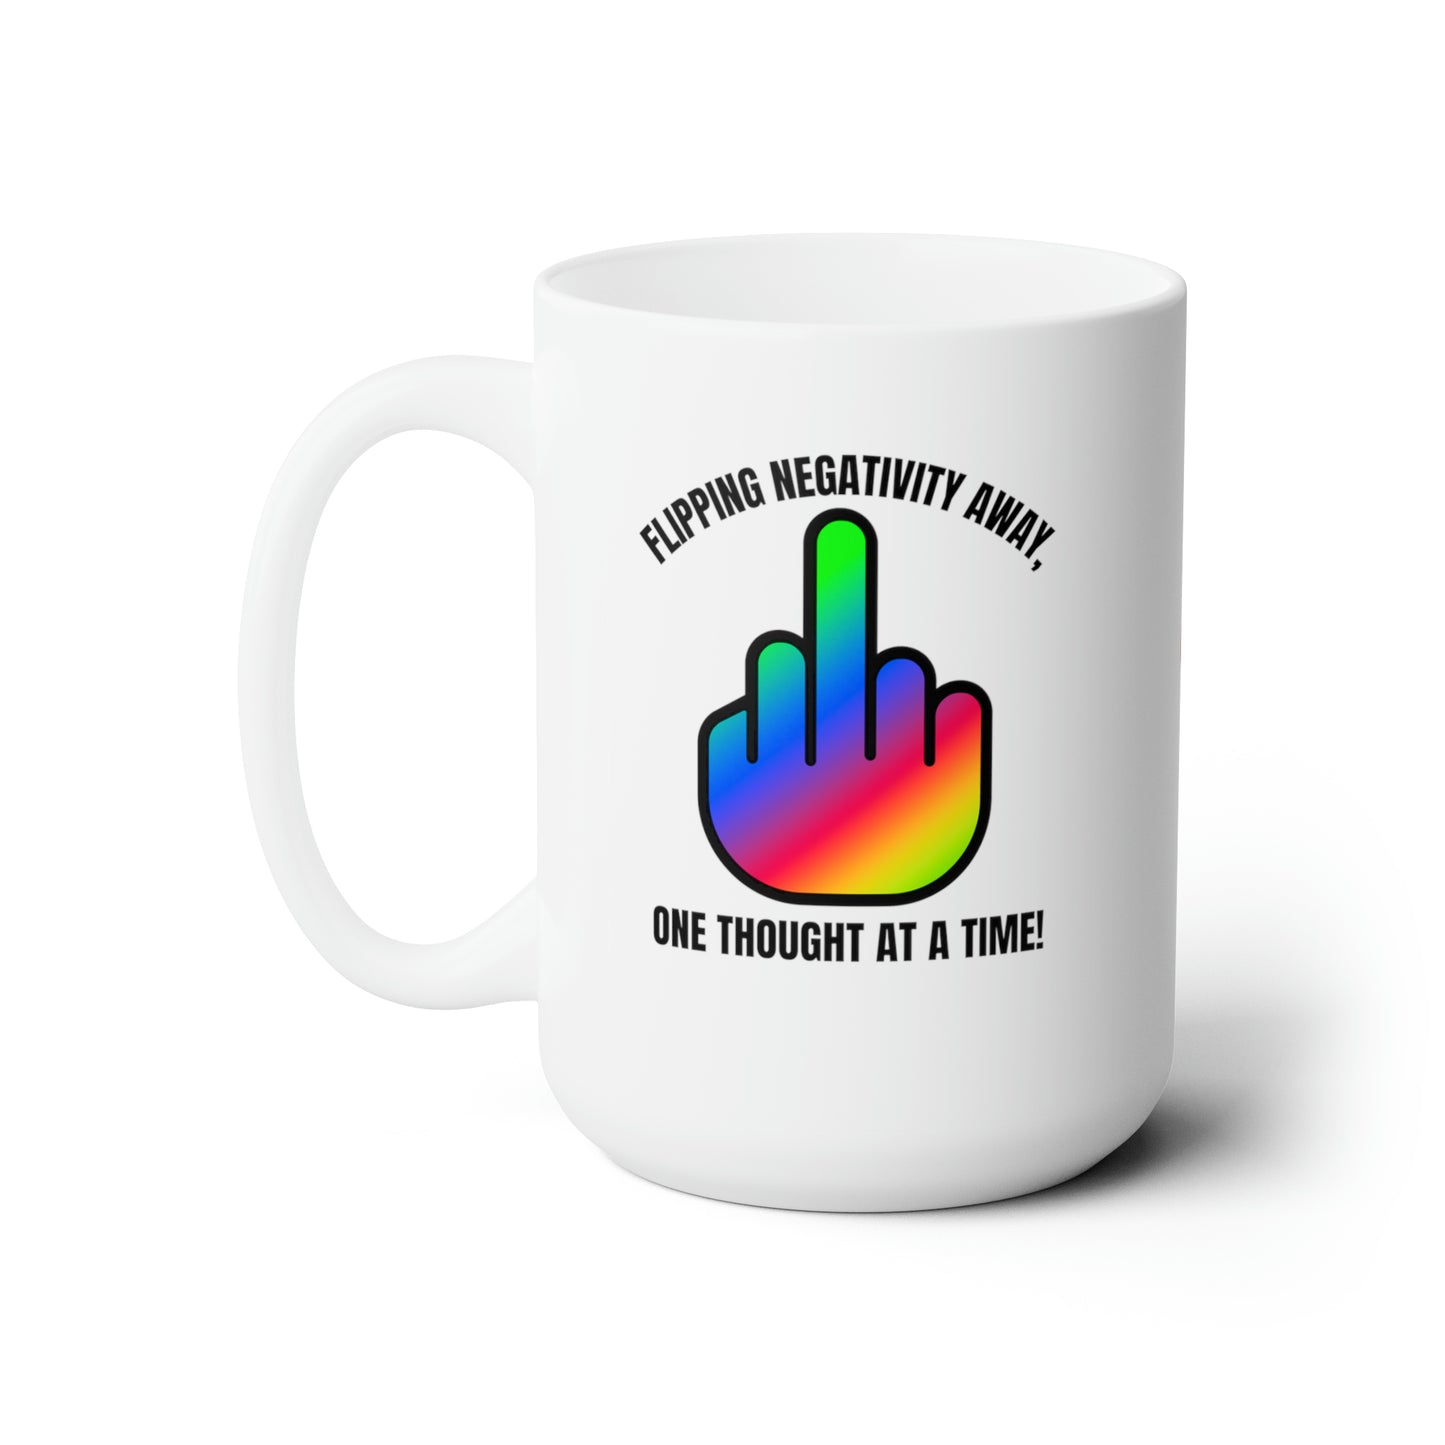 Flip Negativity! (Finger) 15oz mug